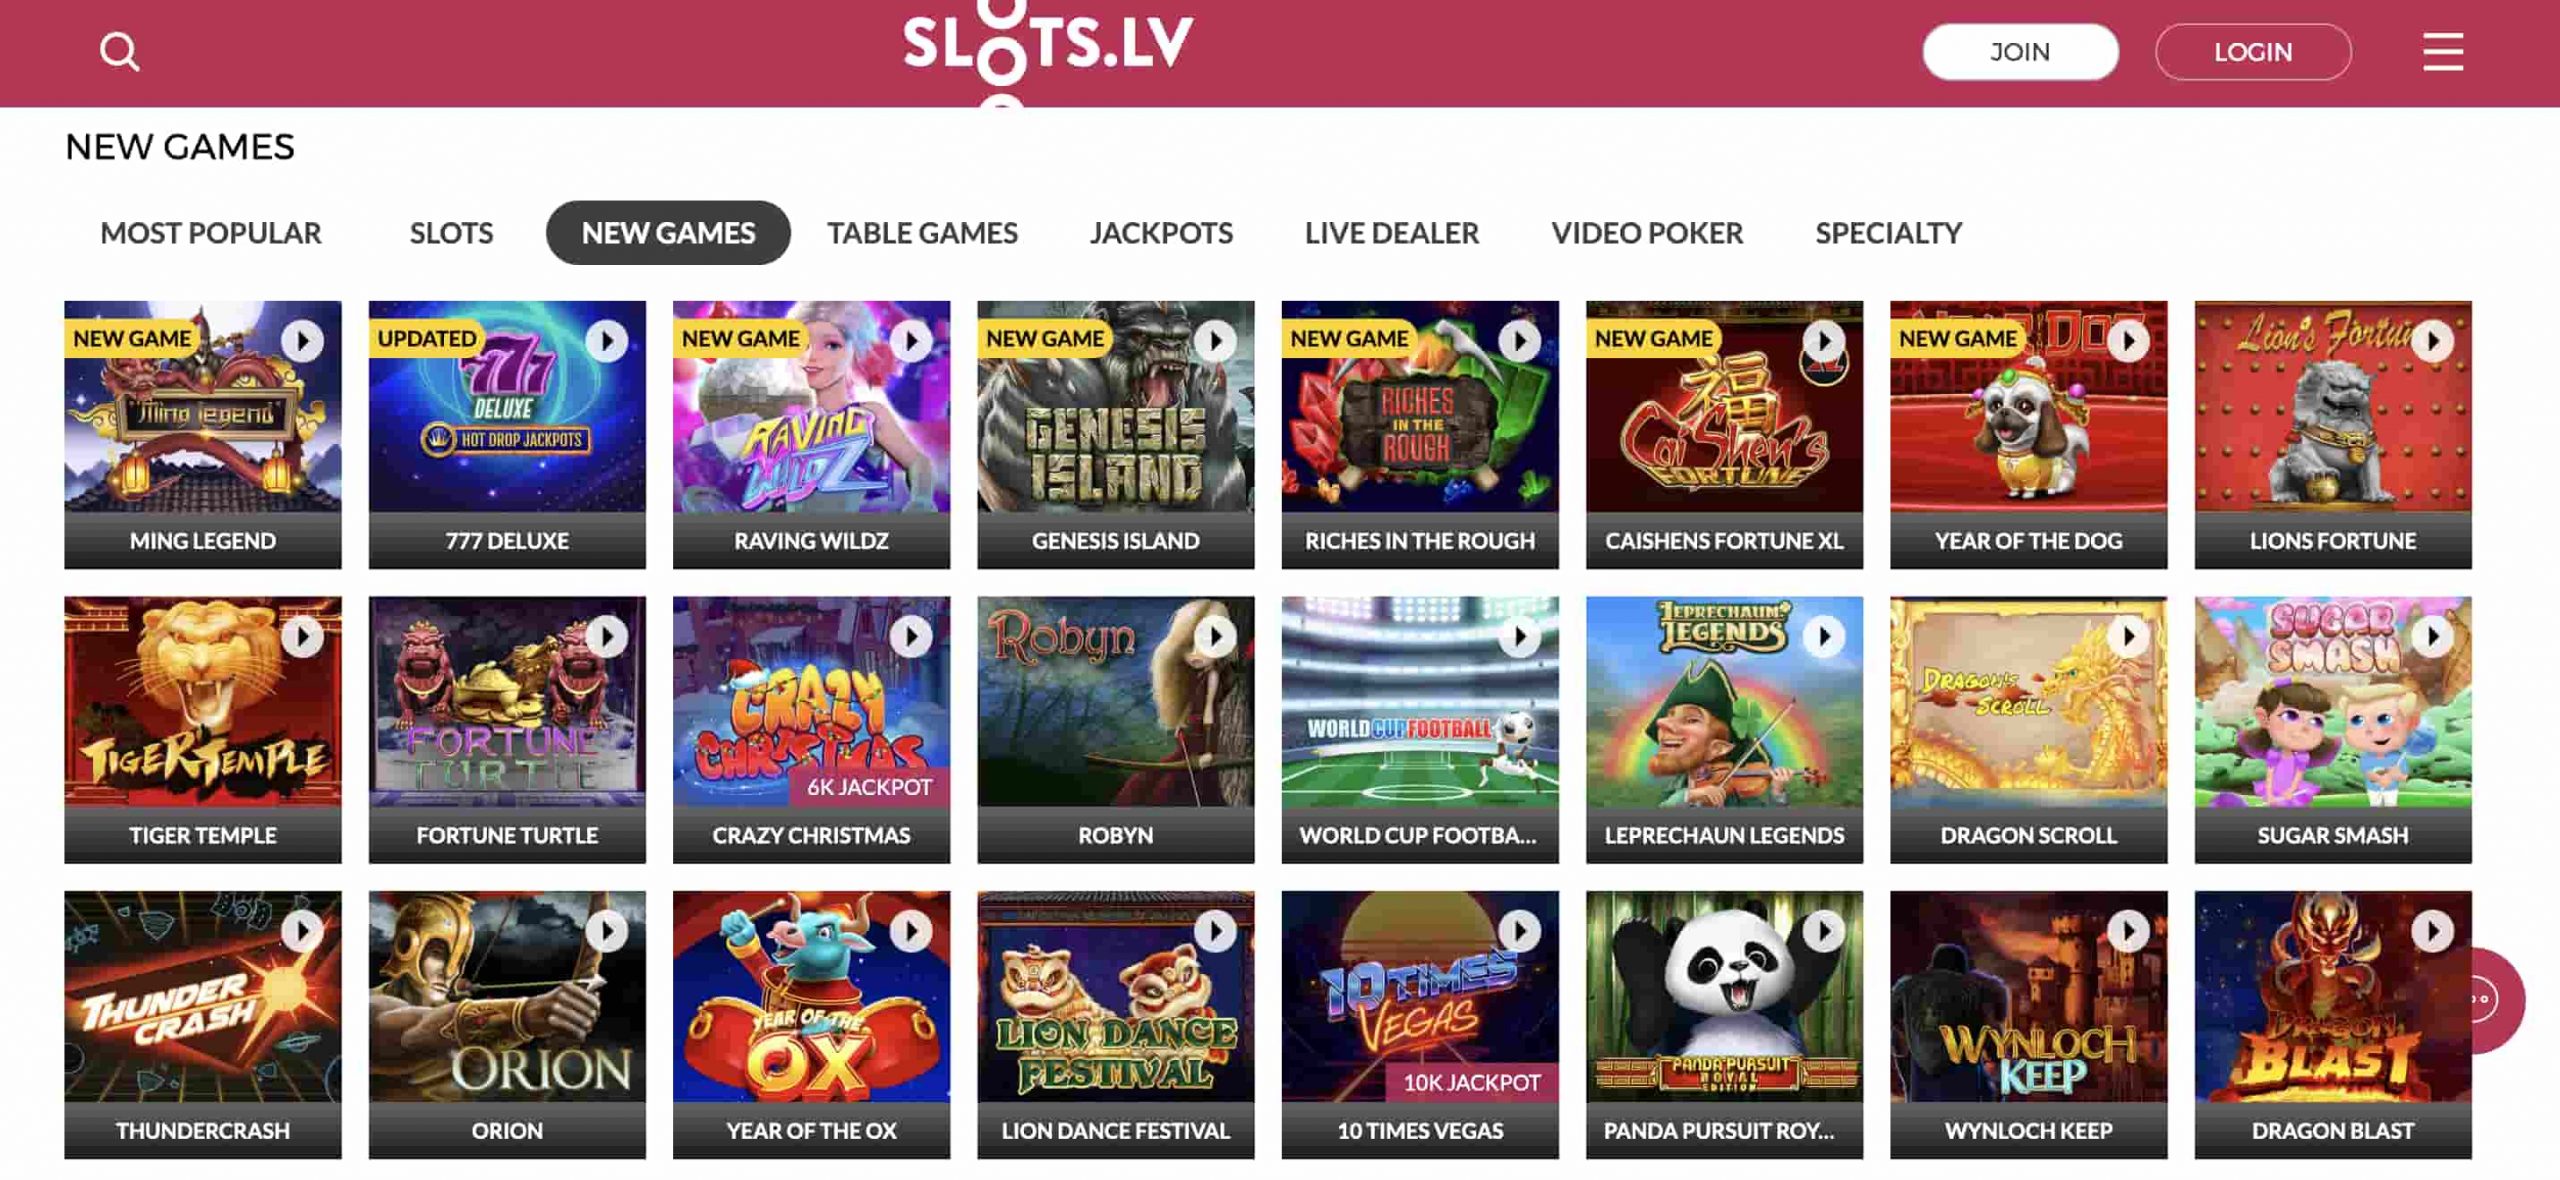 Slots.lv New Games